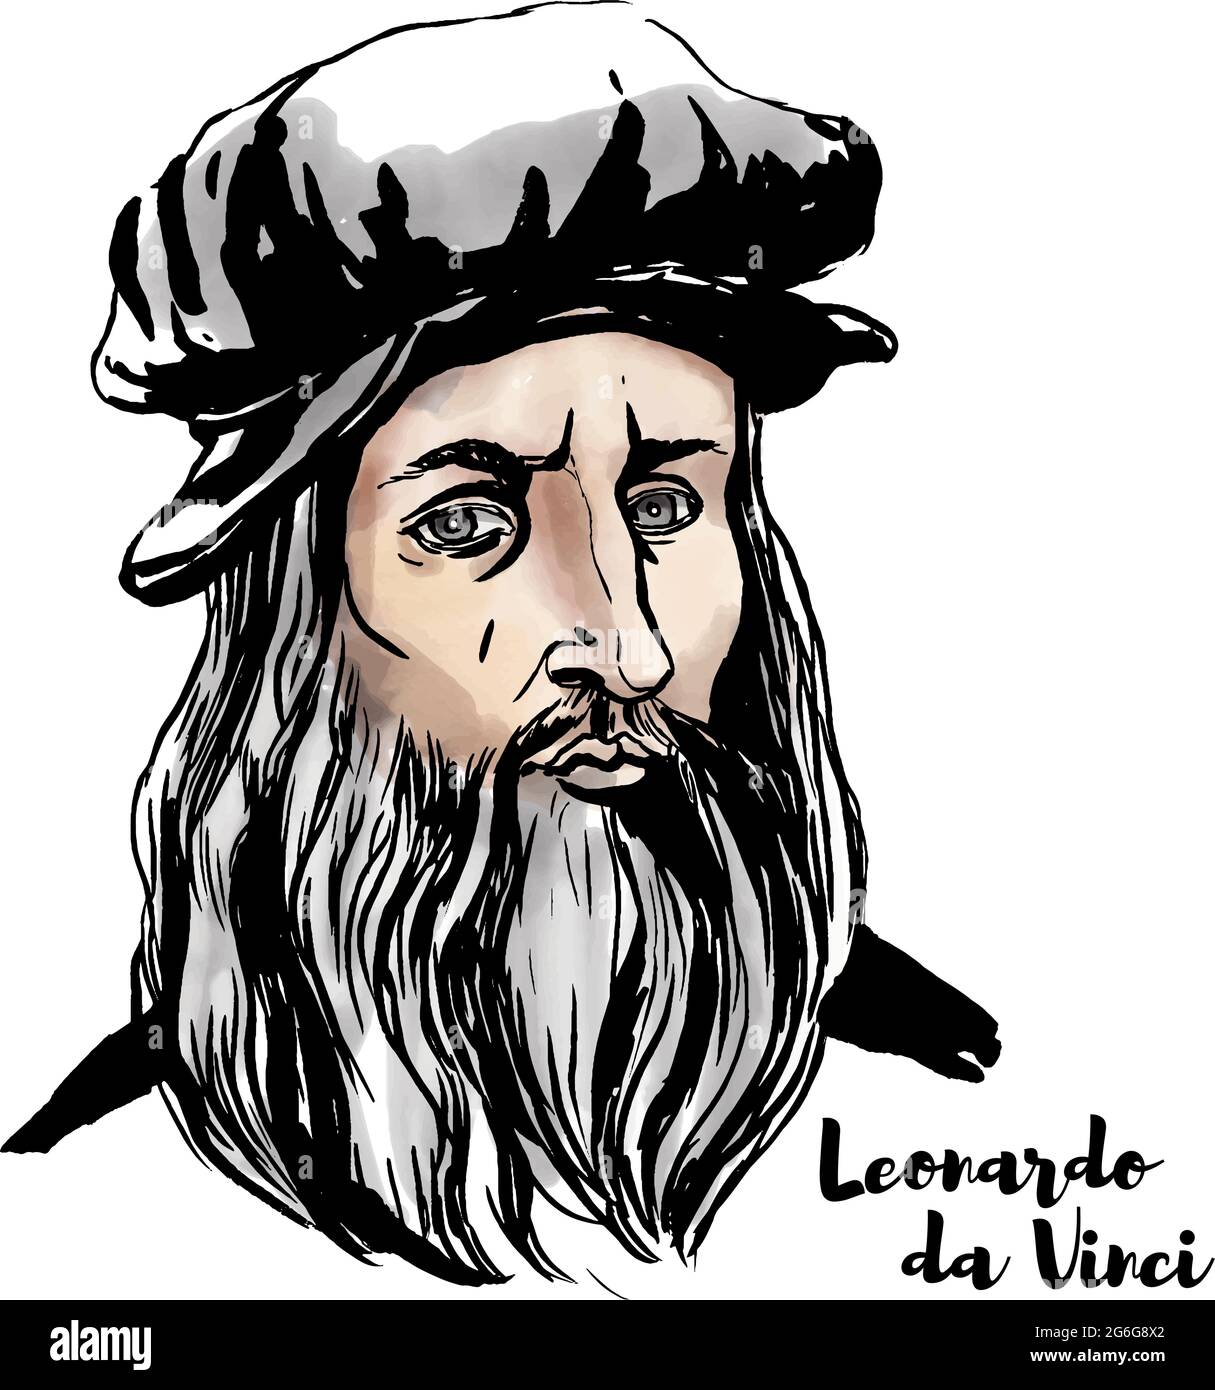 Leonardo da Vinci watercolor vector portrait with ink contours. Stock Vector